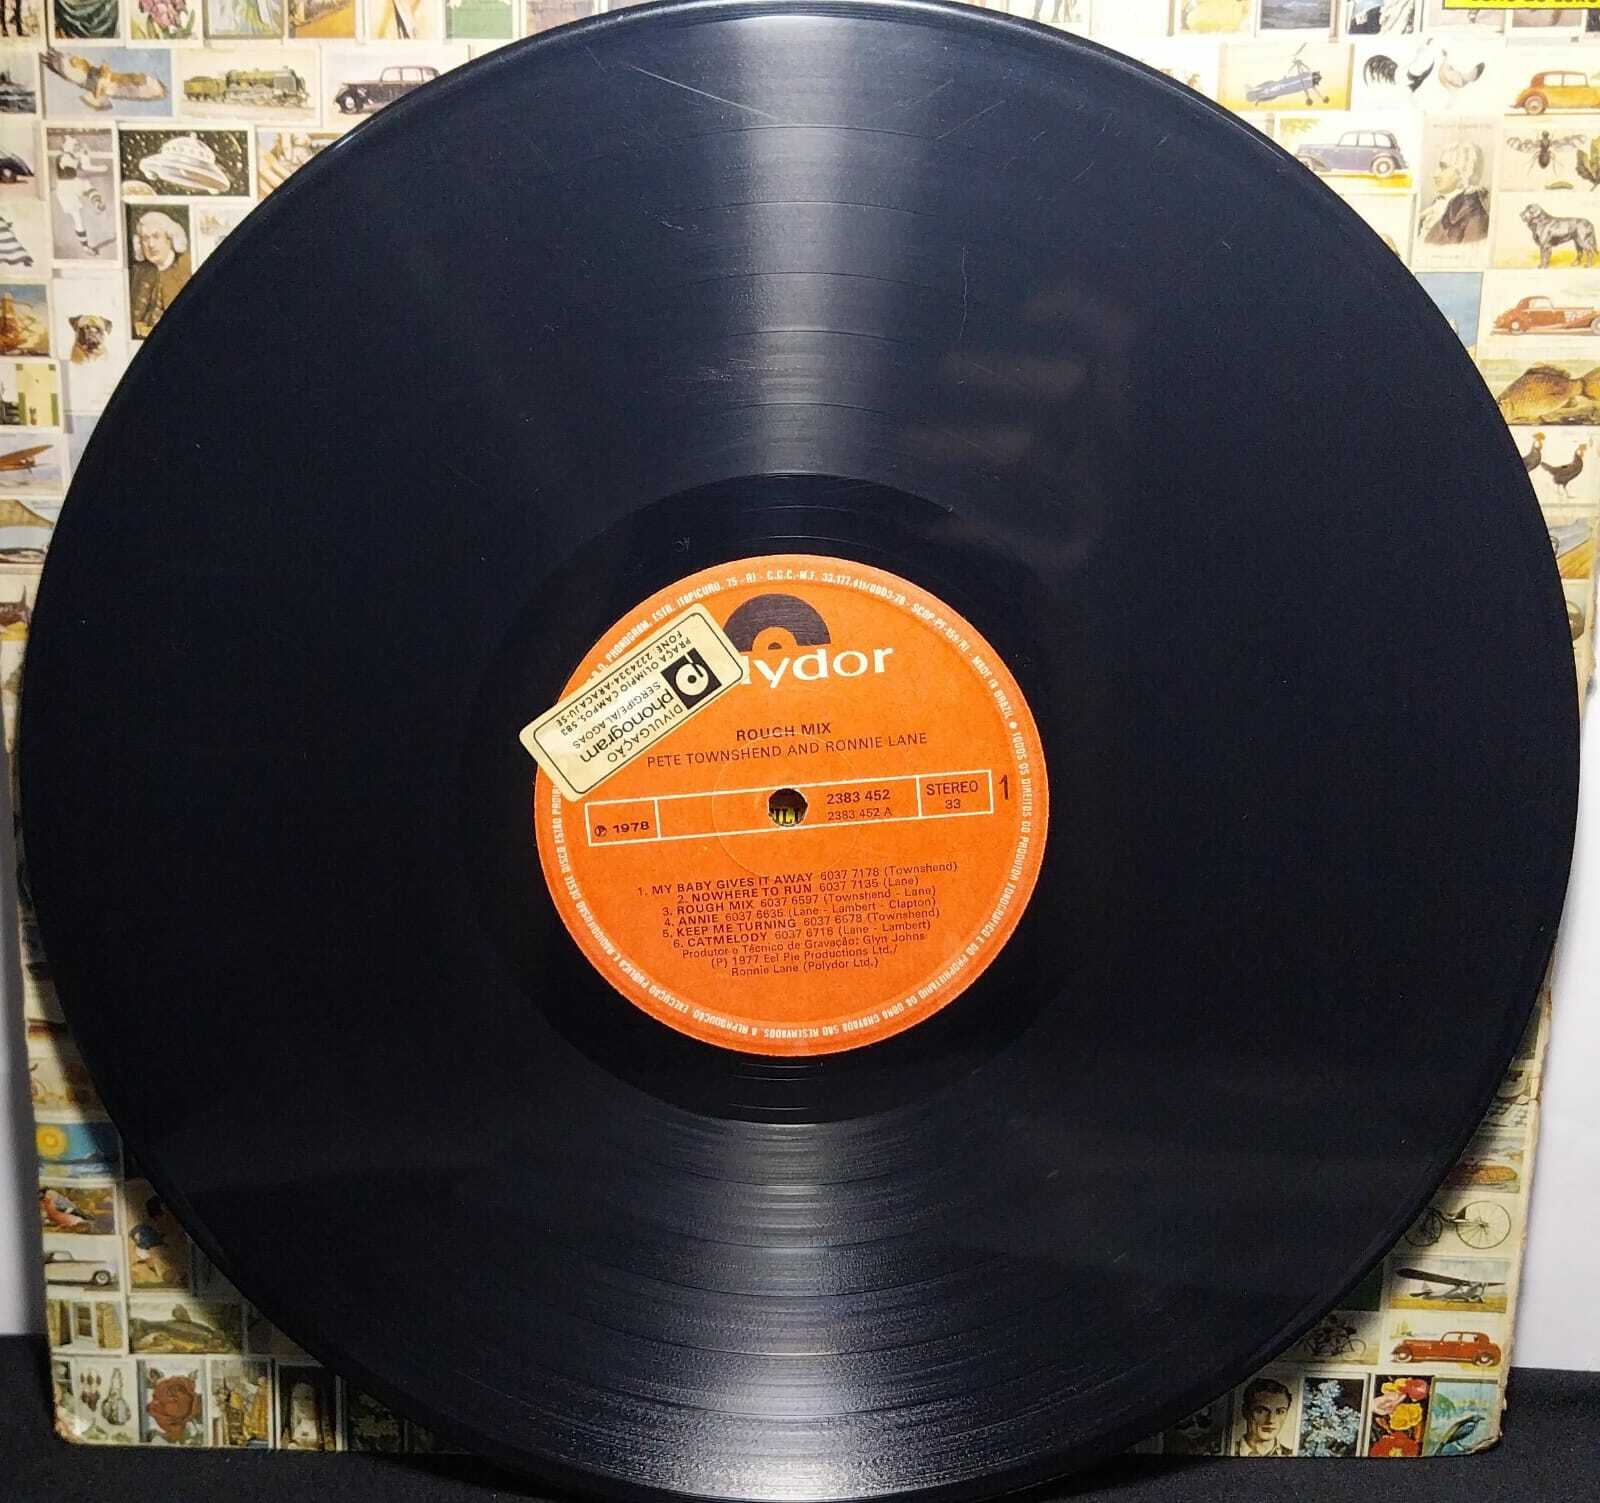 Vinil - Pete Townshend and Ronnie Lane - Rough Mix